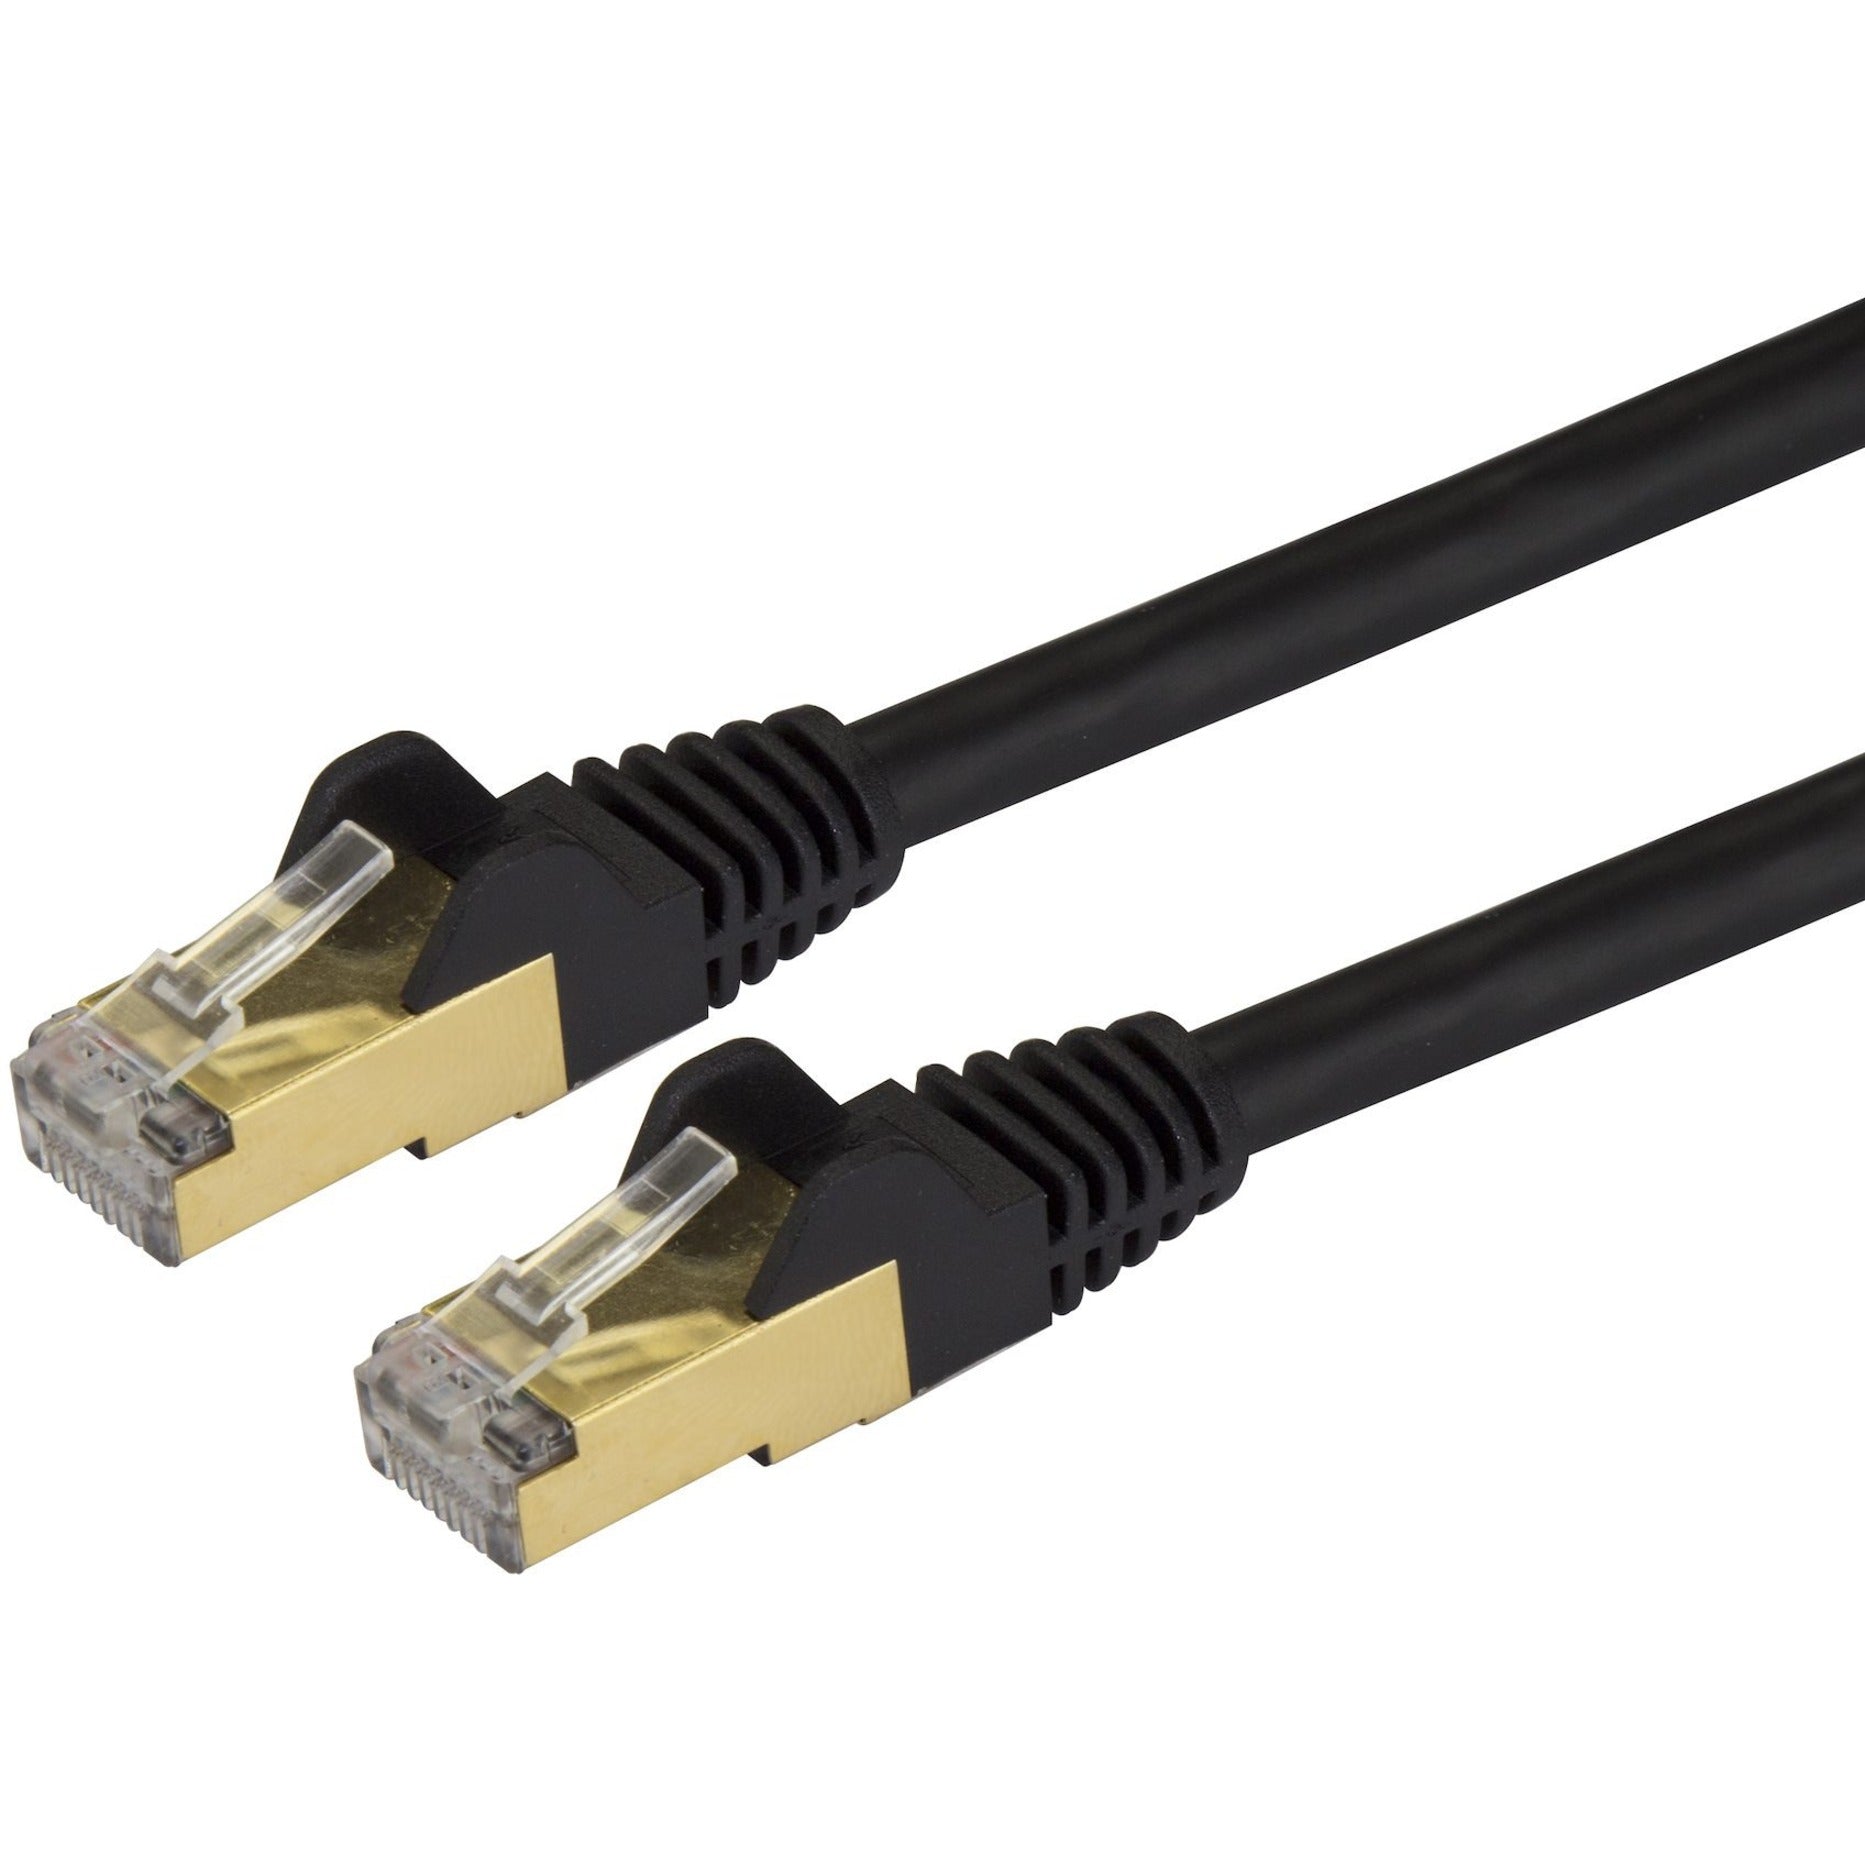 StarTech.com C6ASPAT12BK Cat6a Ethernet Patch Cable - Shielded (STP) - 12 ft., Black, Snagless RJ45 Ethernet Cord